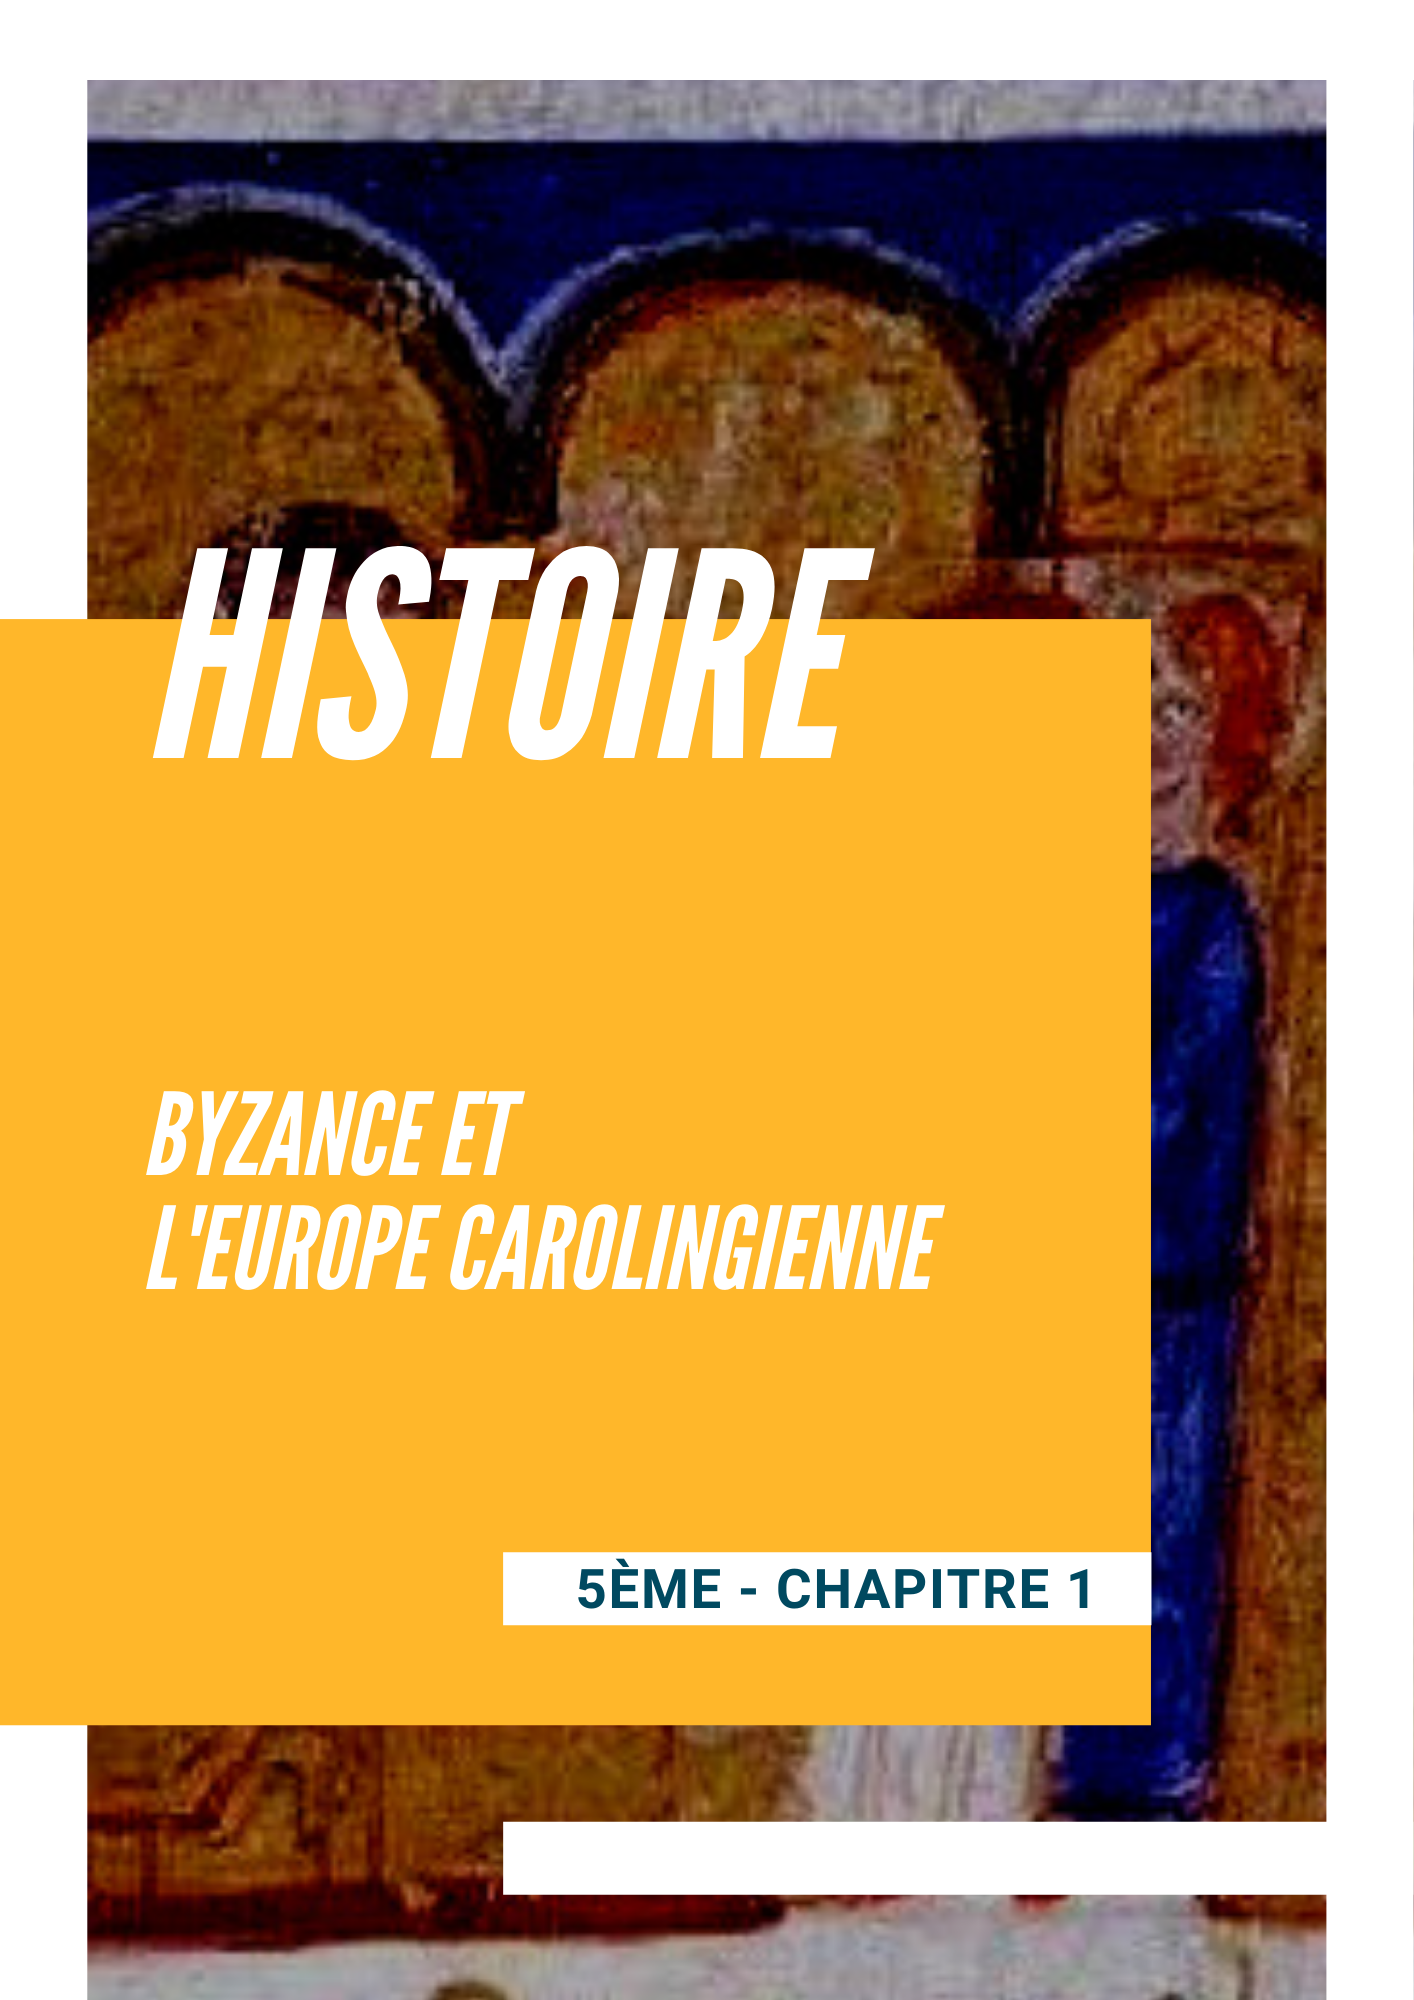 Chapitre 1 - Byzance et l'Europe carolingienne